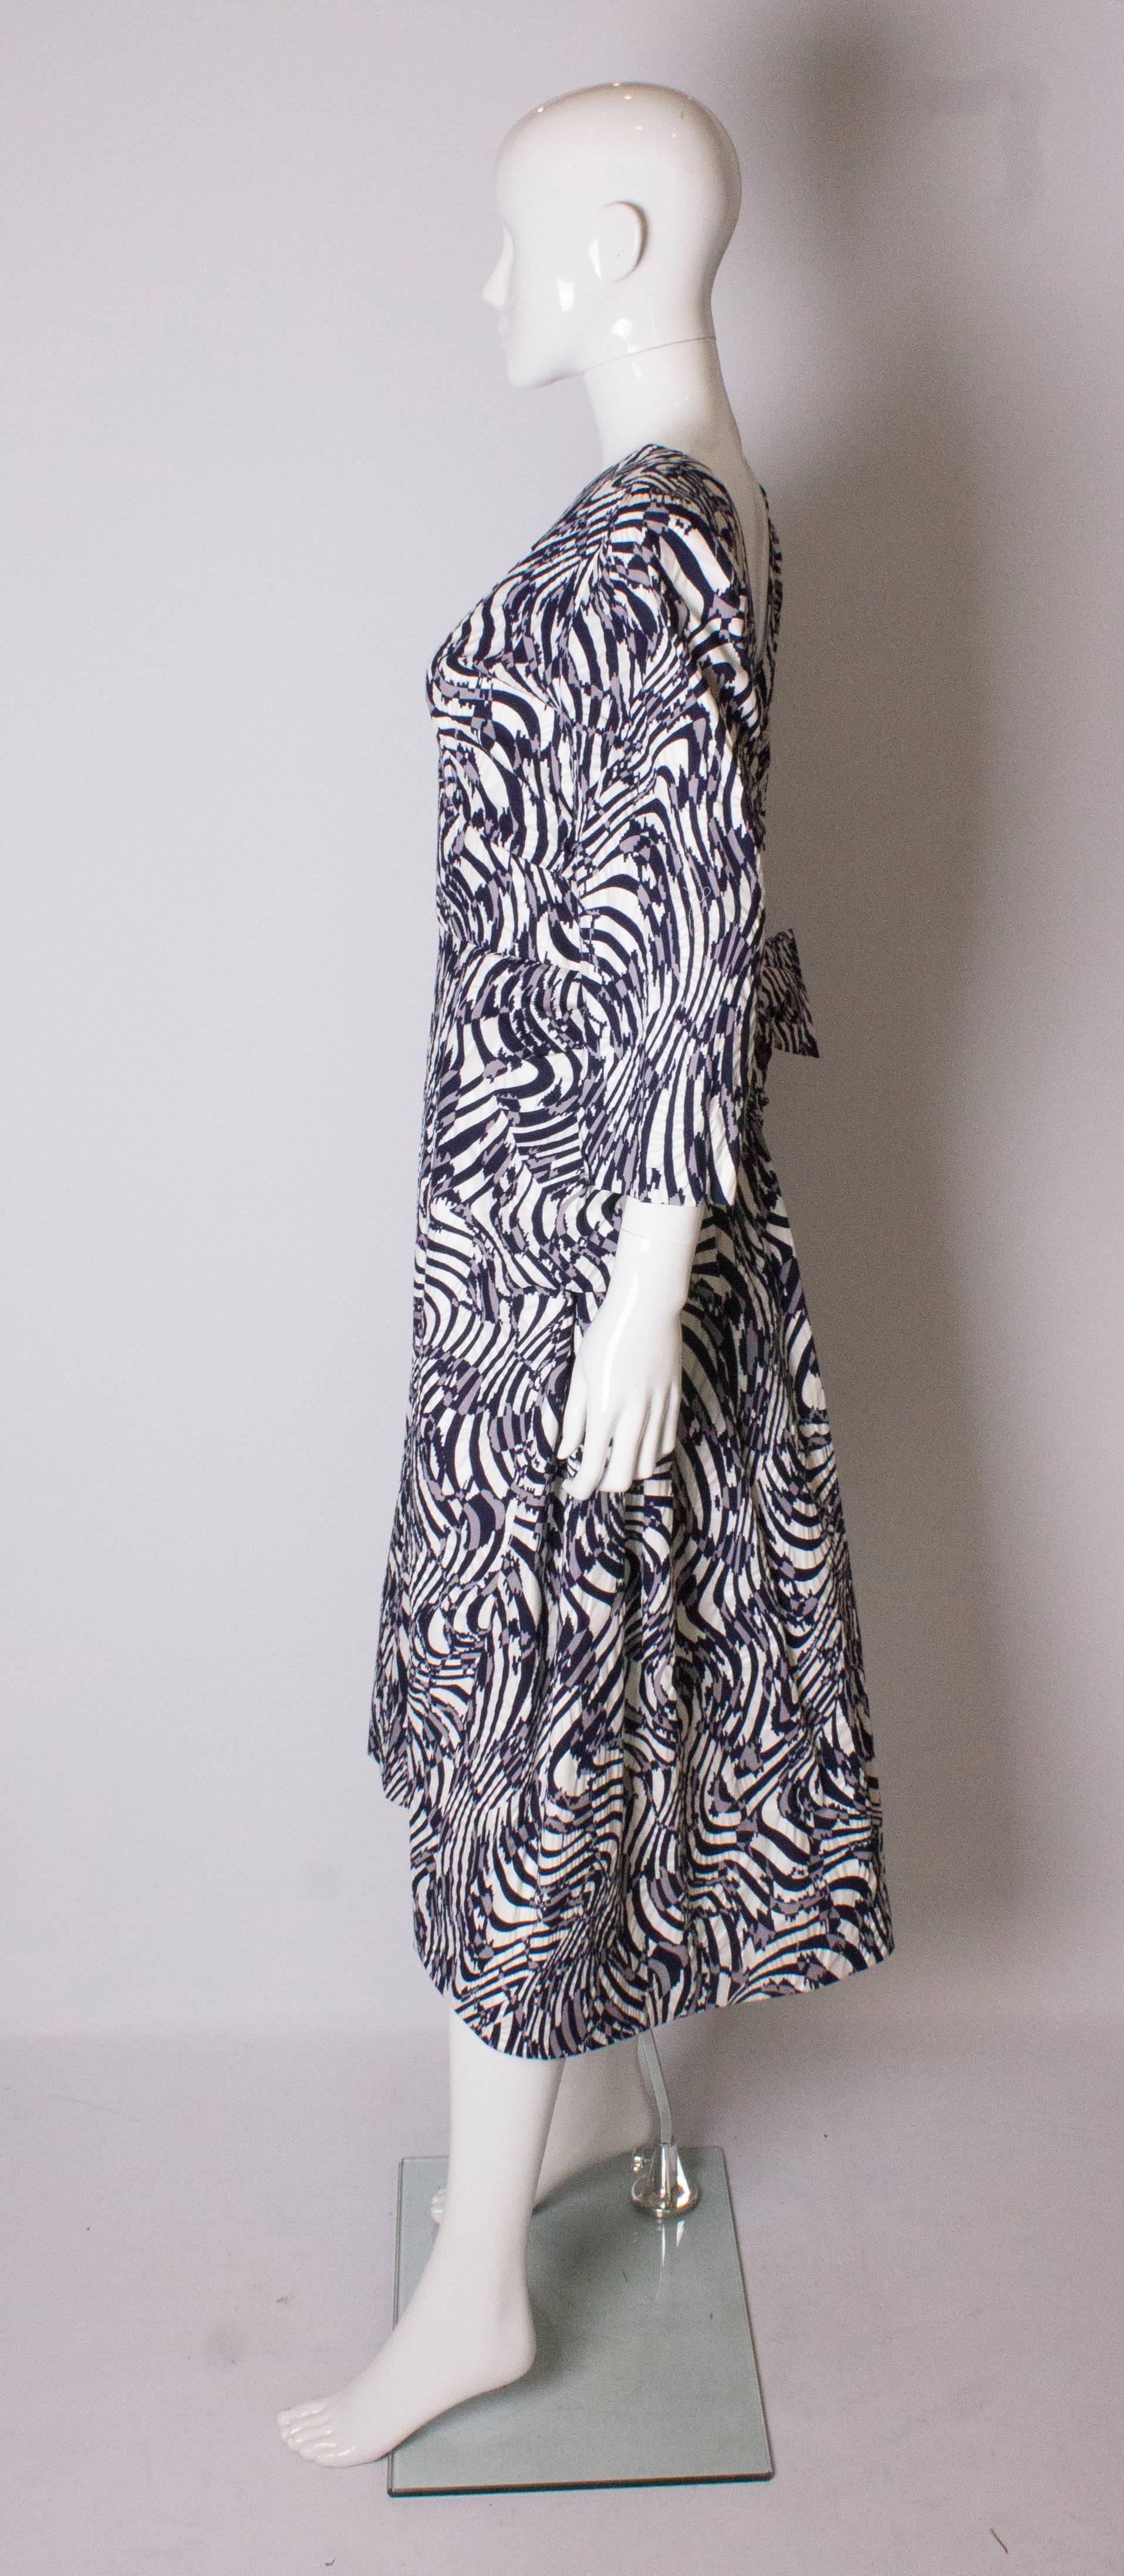 jason campbell studio vintage dress